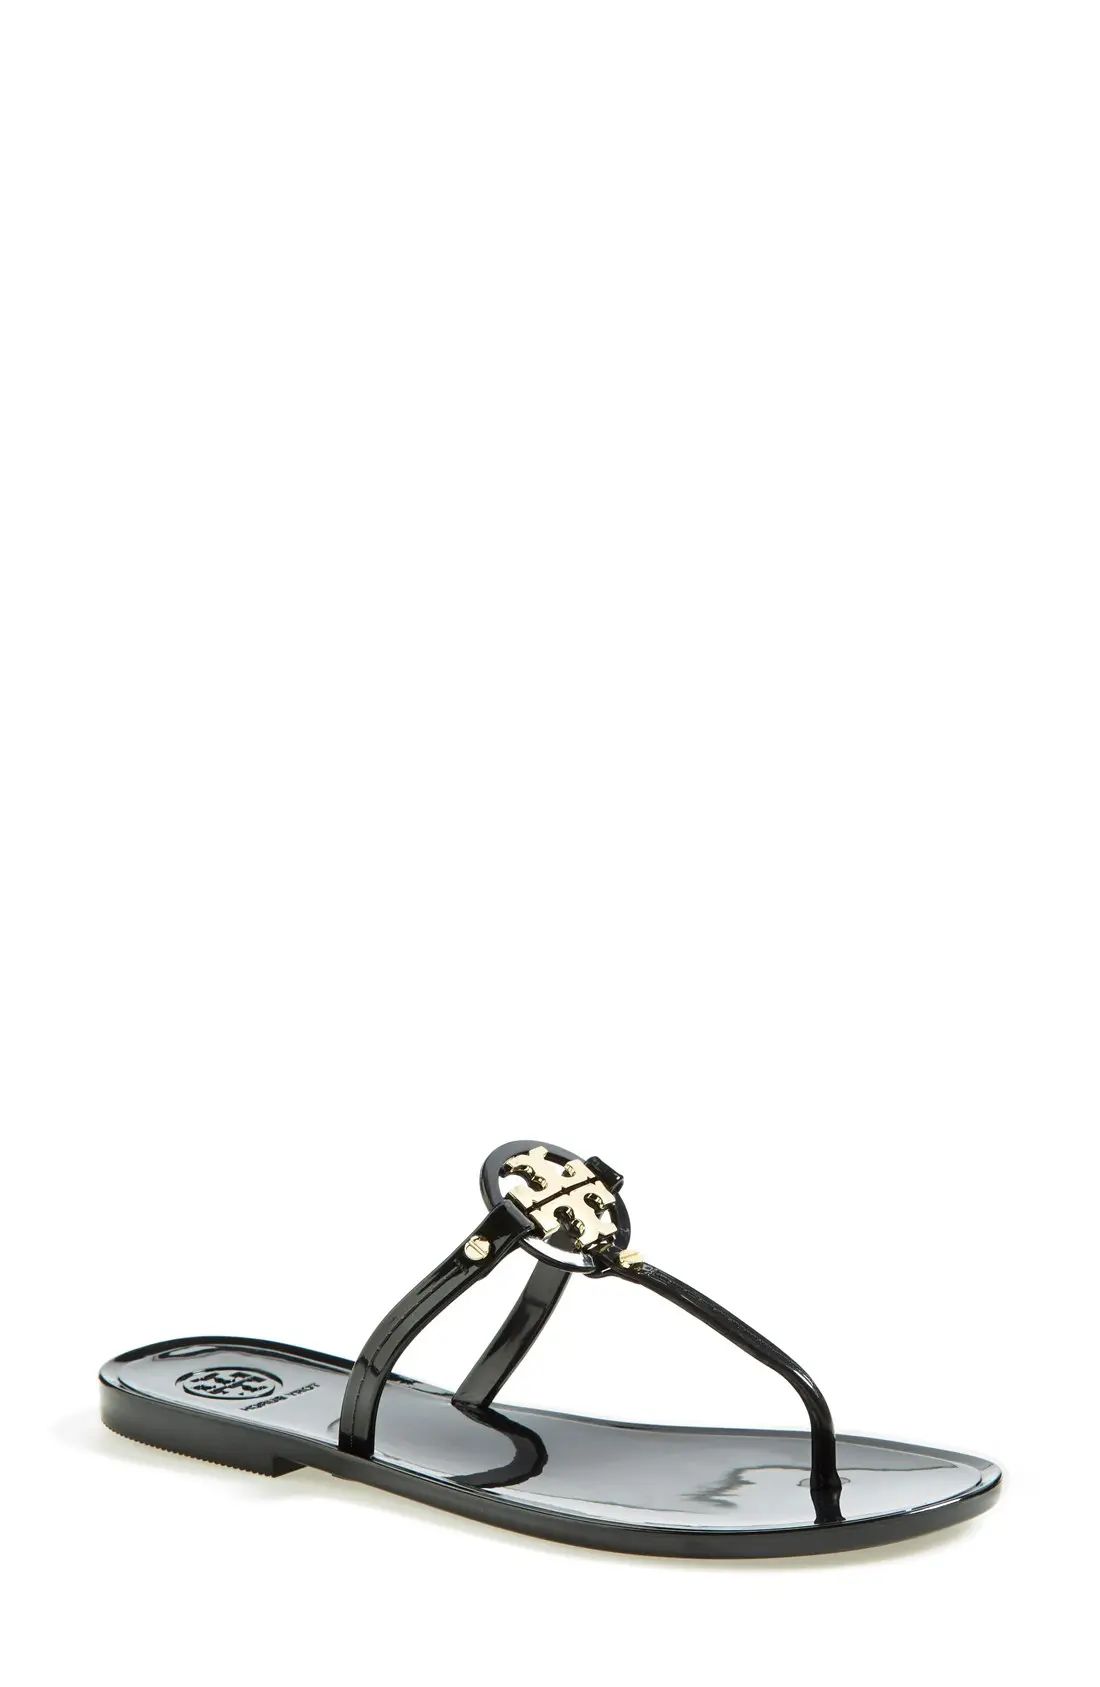 Women's Tory Burch 'Mini Miller' Flat Sandal, Size 9 M - Black | Nordstrom